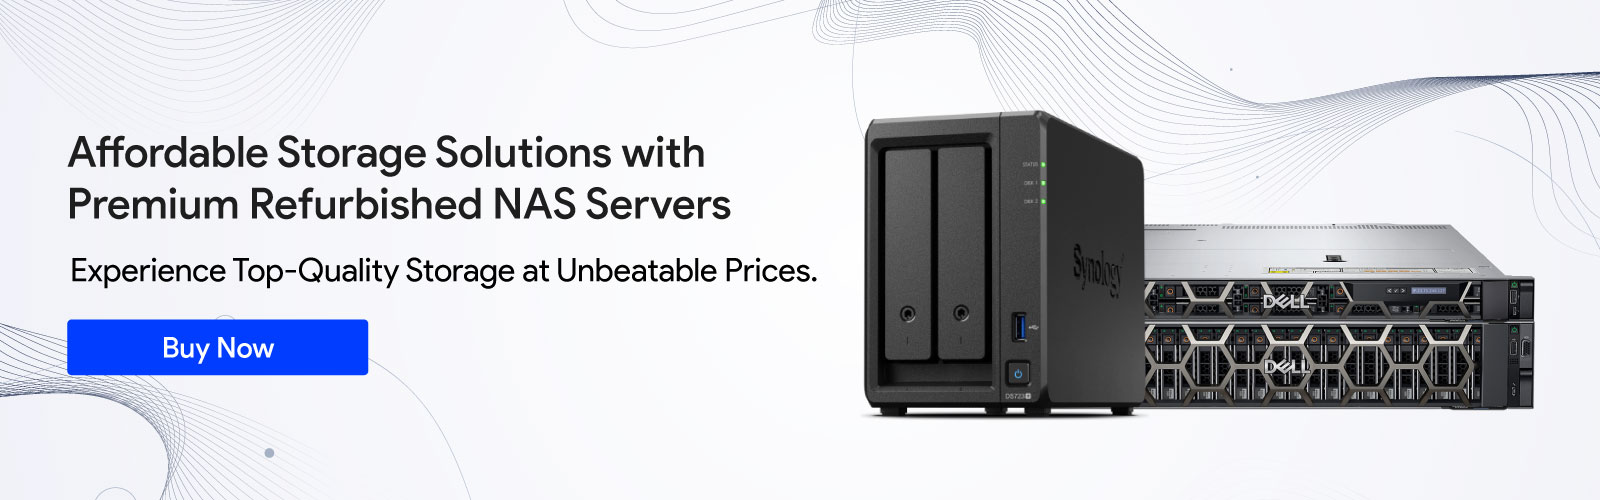 Refurbished-NAS-Storage-Servers-Price-list